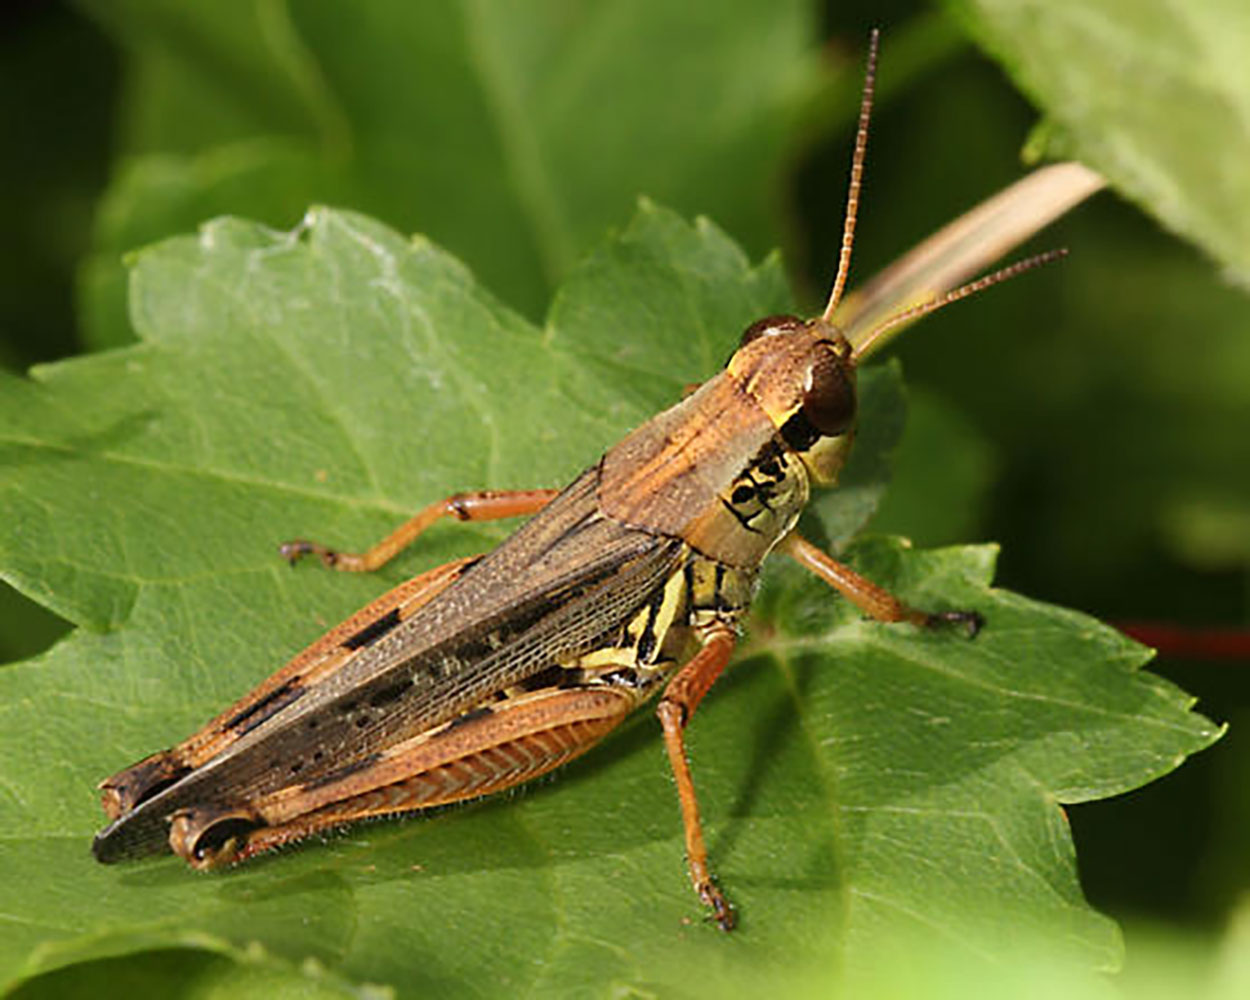 A brownish yellow grasshopper with reddish legs sitting on a green leaf. 